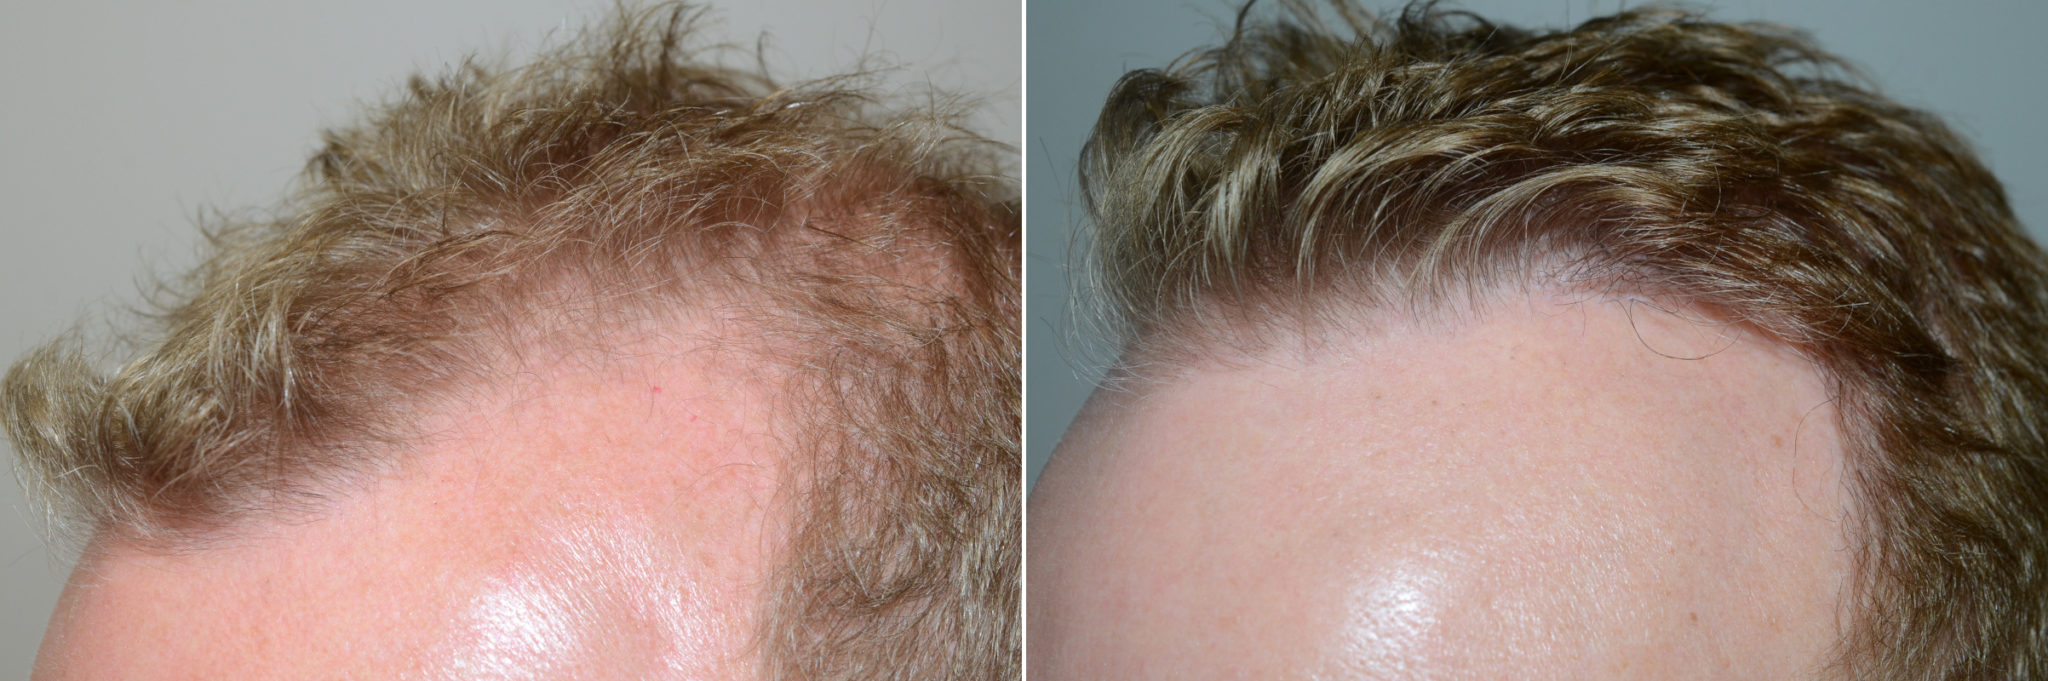 Hair Transplants For Men Pictures Miami Fl Paciente 59016